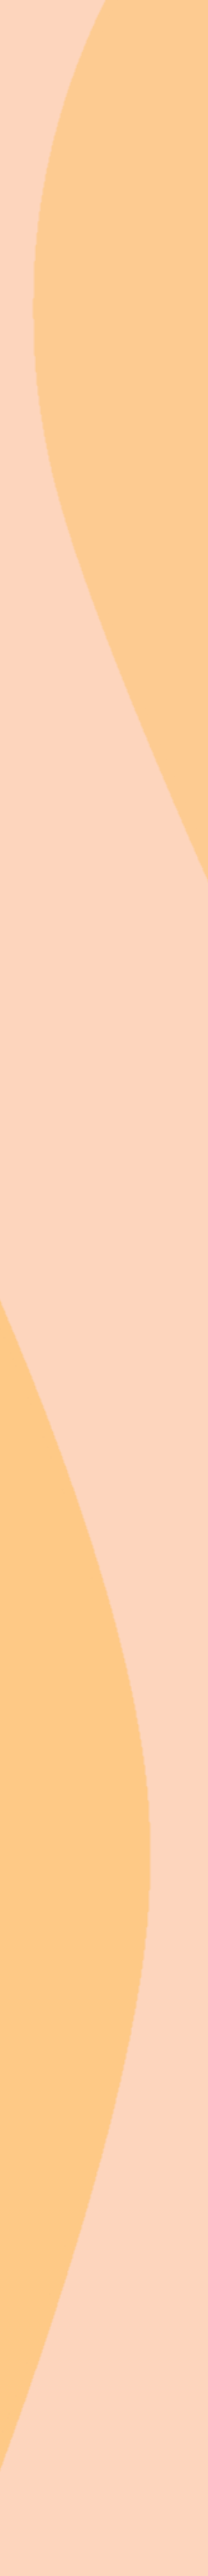 illustration marge avec formes abstraites (orange et jaune)